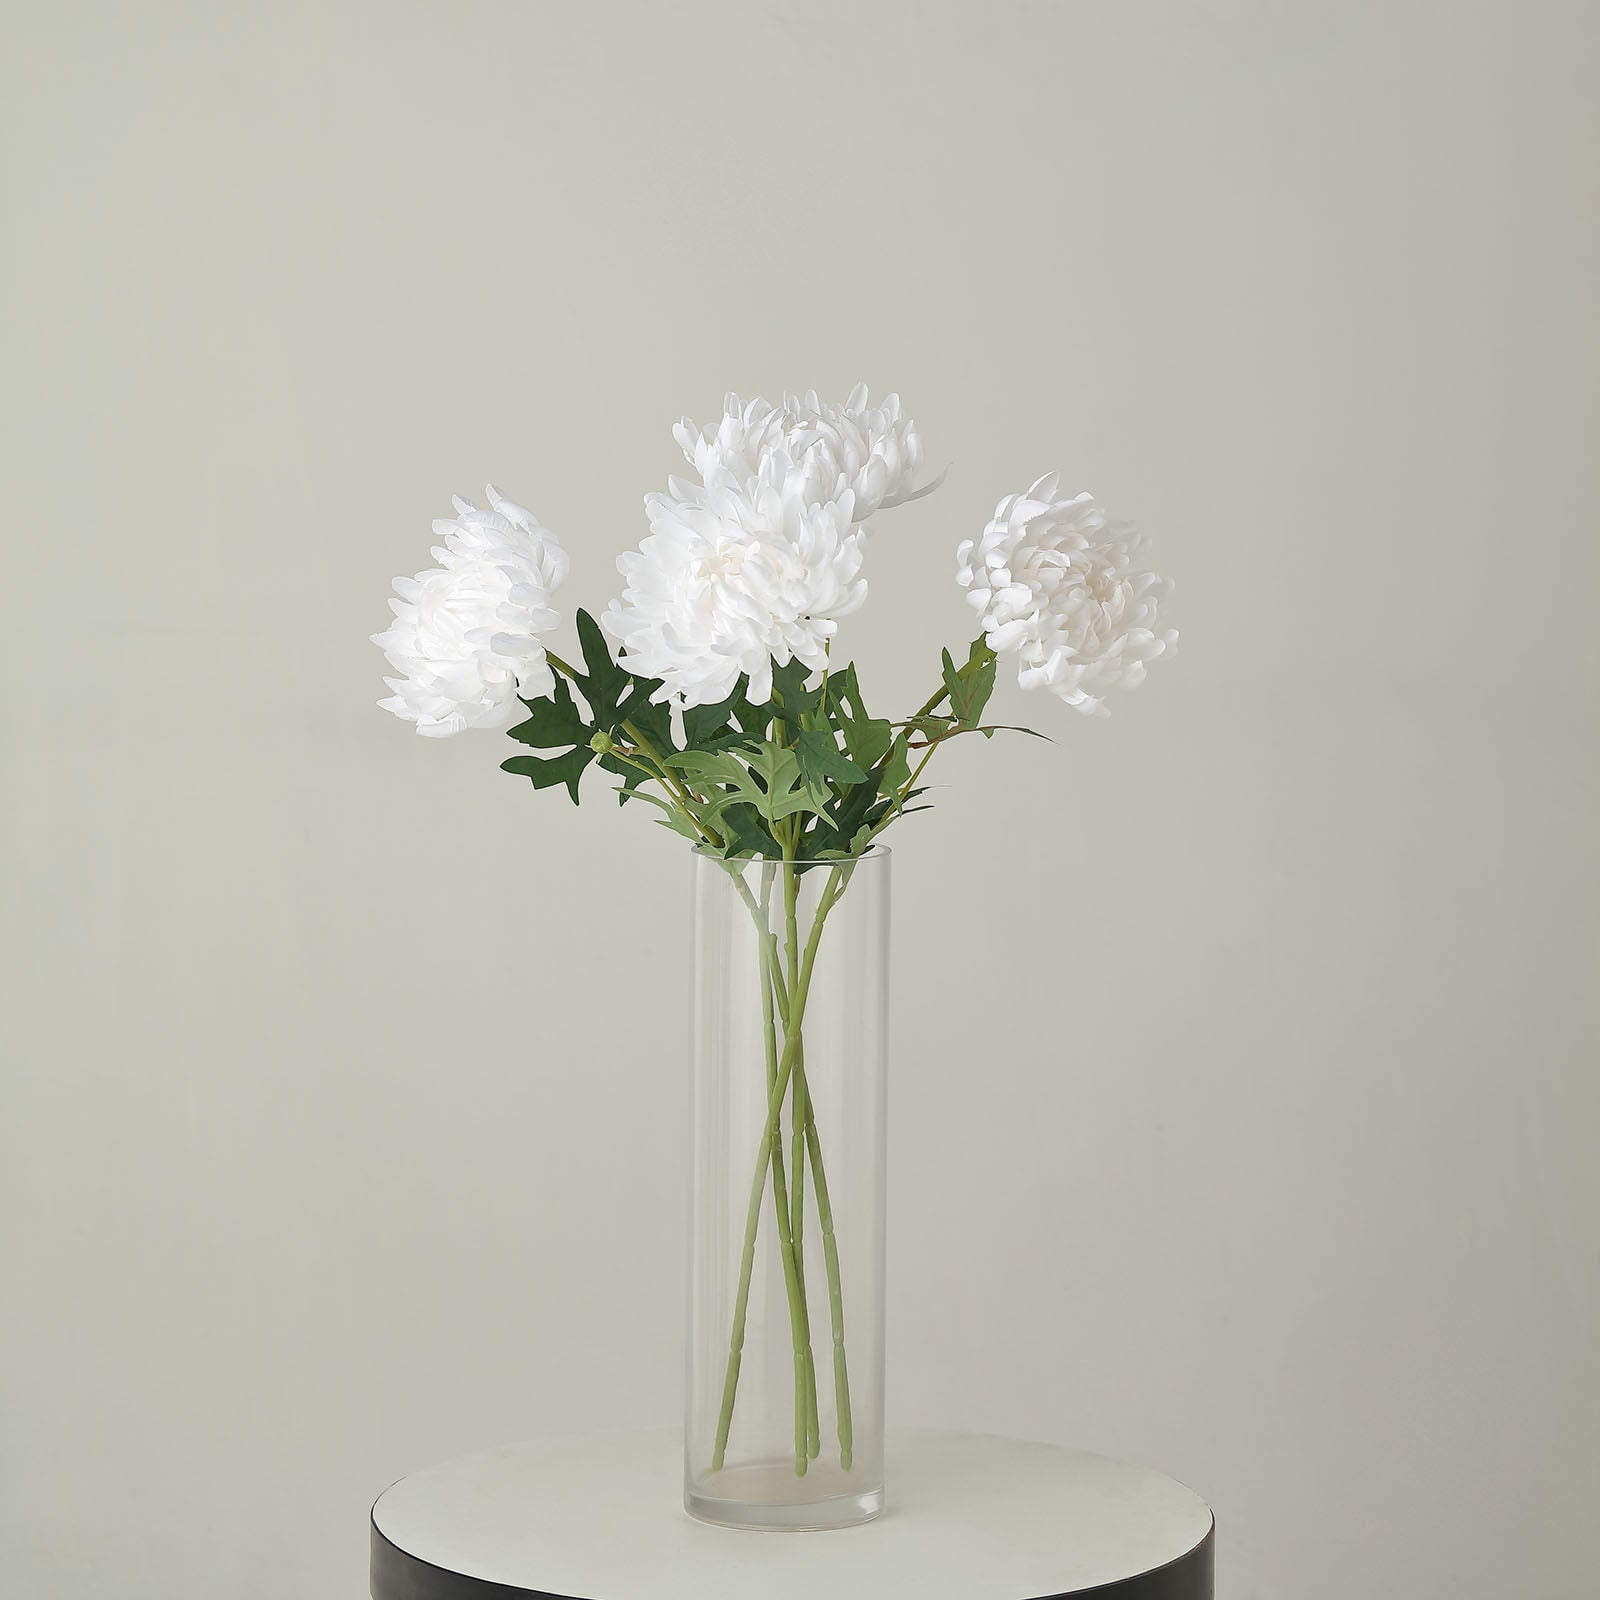 Meuva 1pc 6 Head Chrysanthemum Artificial Flower Bouquet Home Wedding Decoration Winter Plants Artificial Dry Foam for Artificial Flowers Artificial